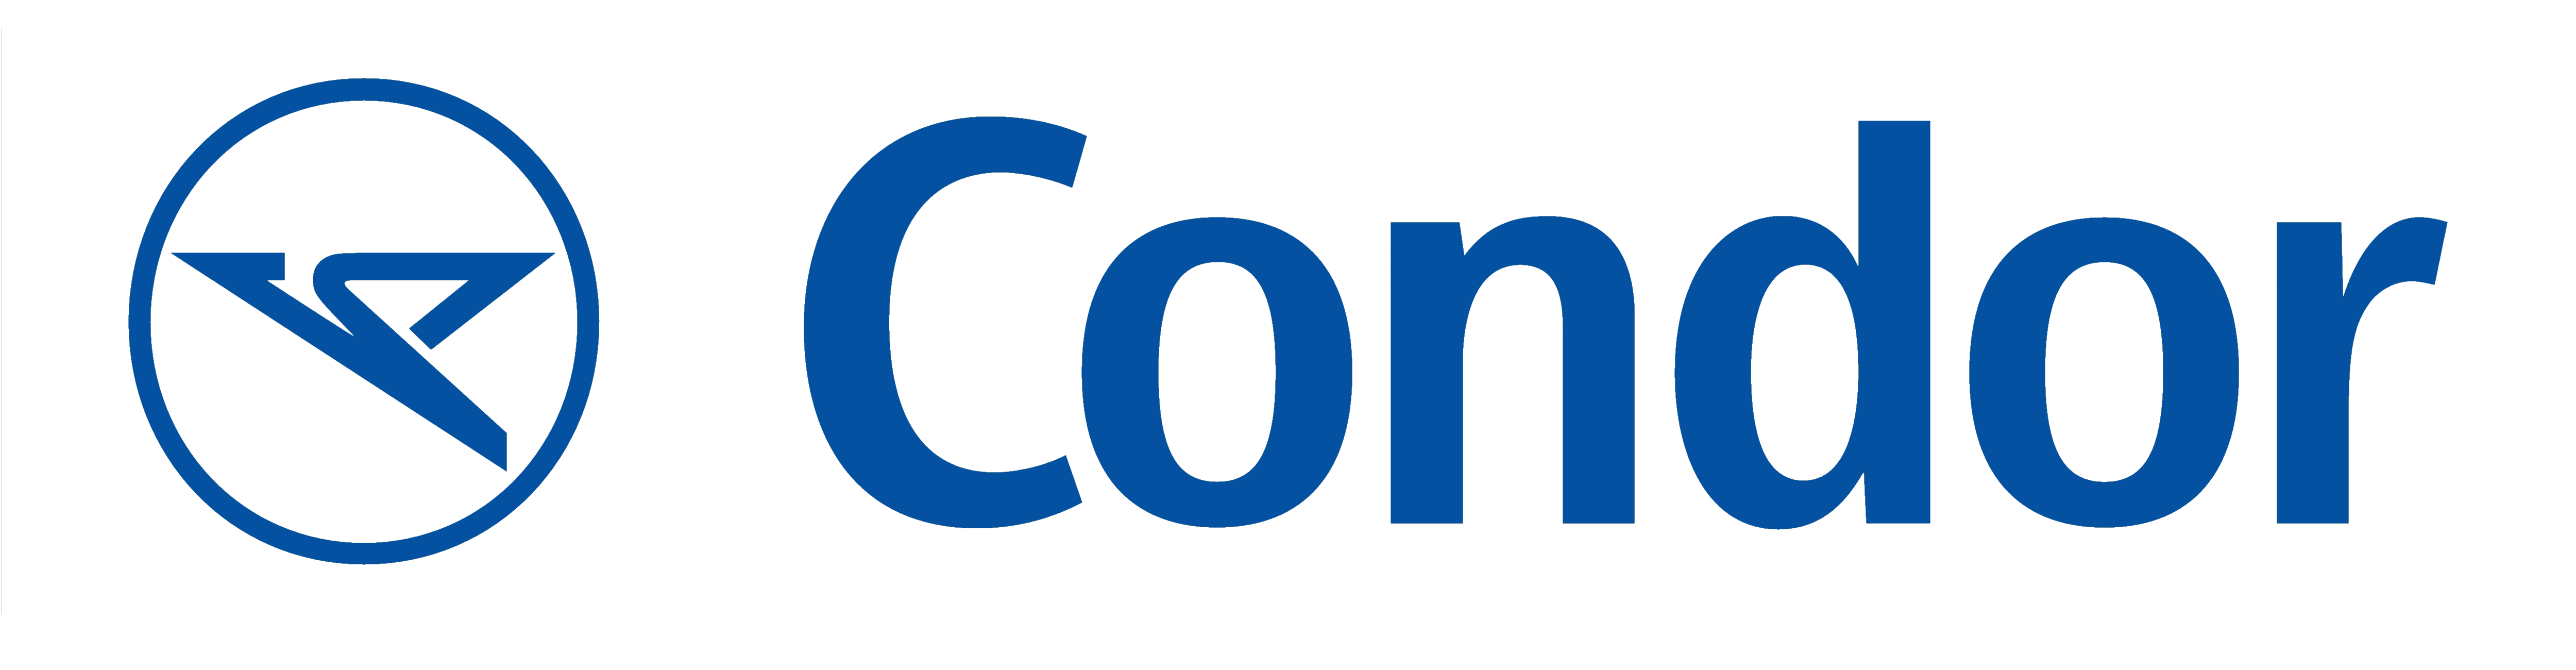 Blue Condor Logo - Condor Airlines logo, blue-white – Logos Download